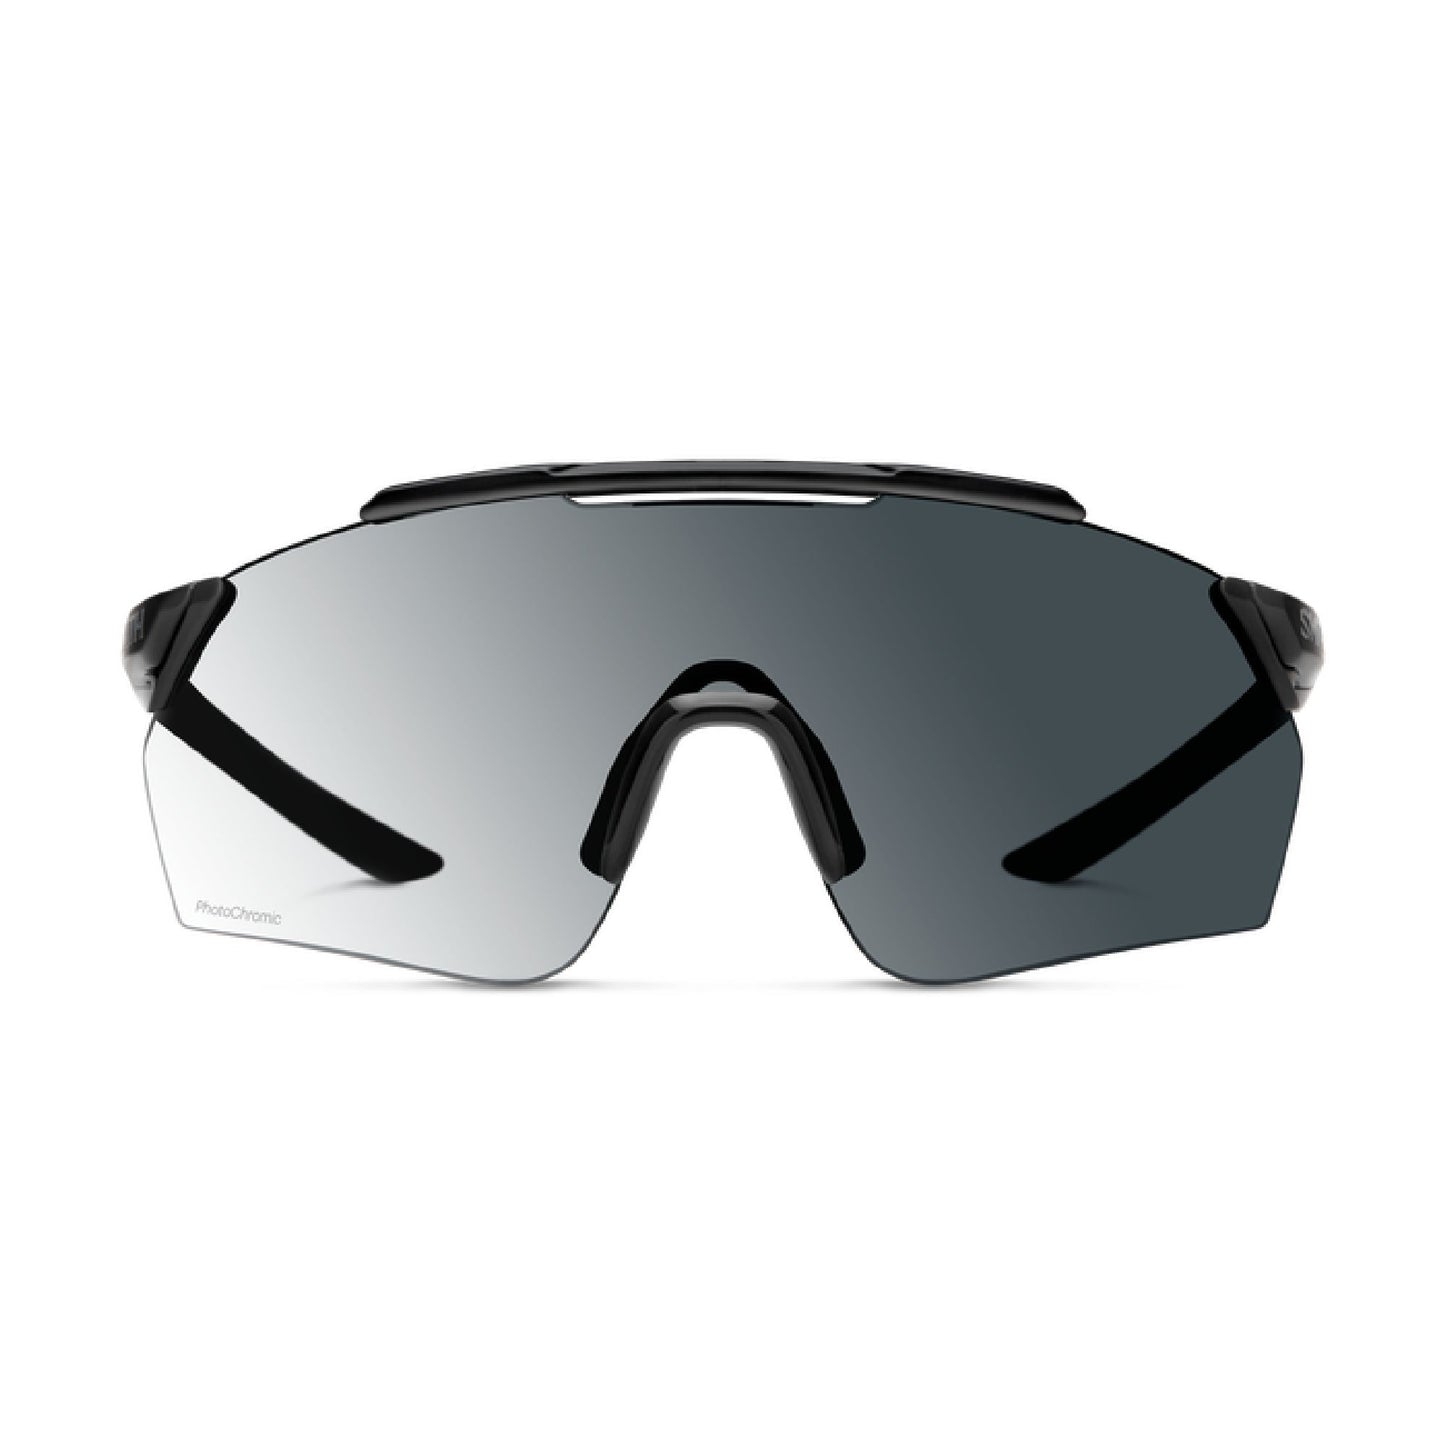 Smith Ruckus Sunglasses Black Photochromic Clear To Gray Sunglasses